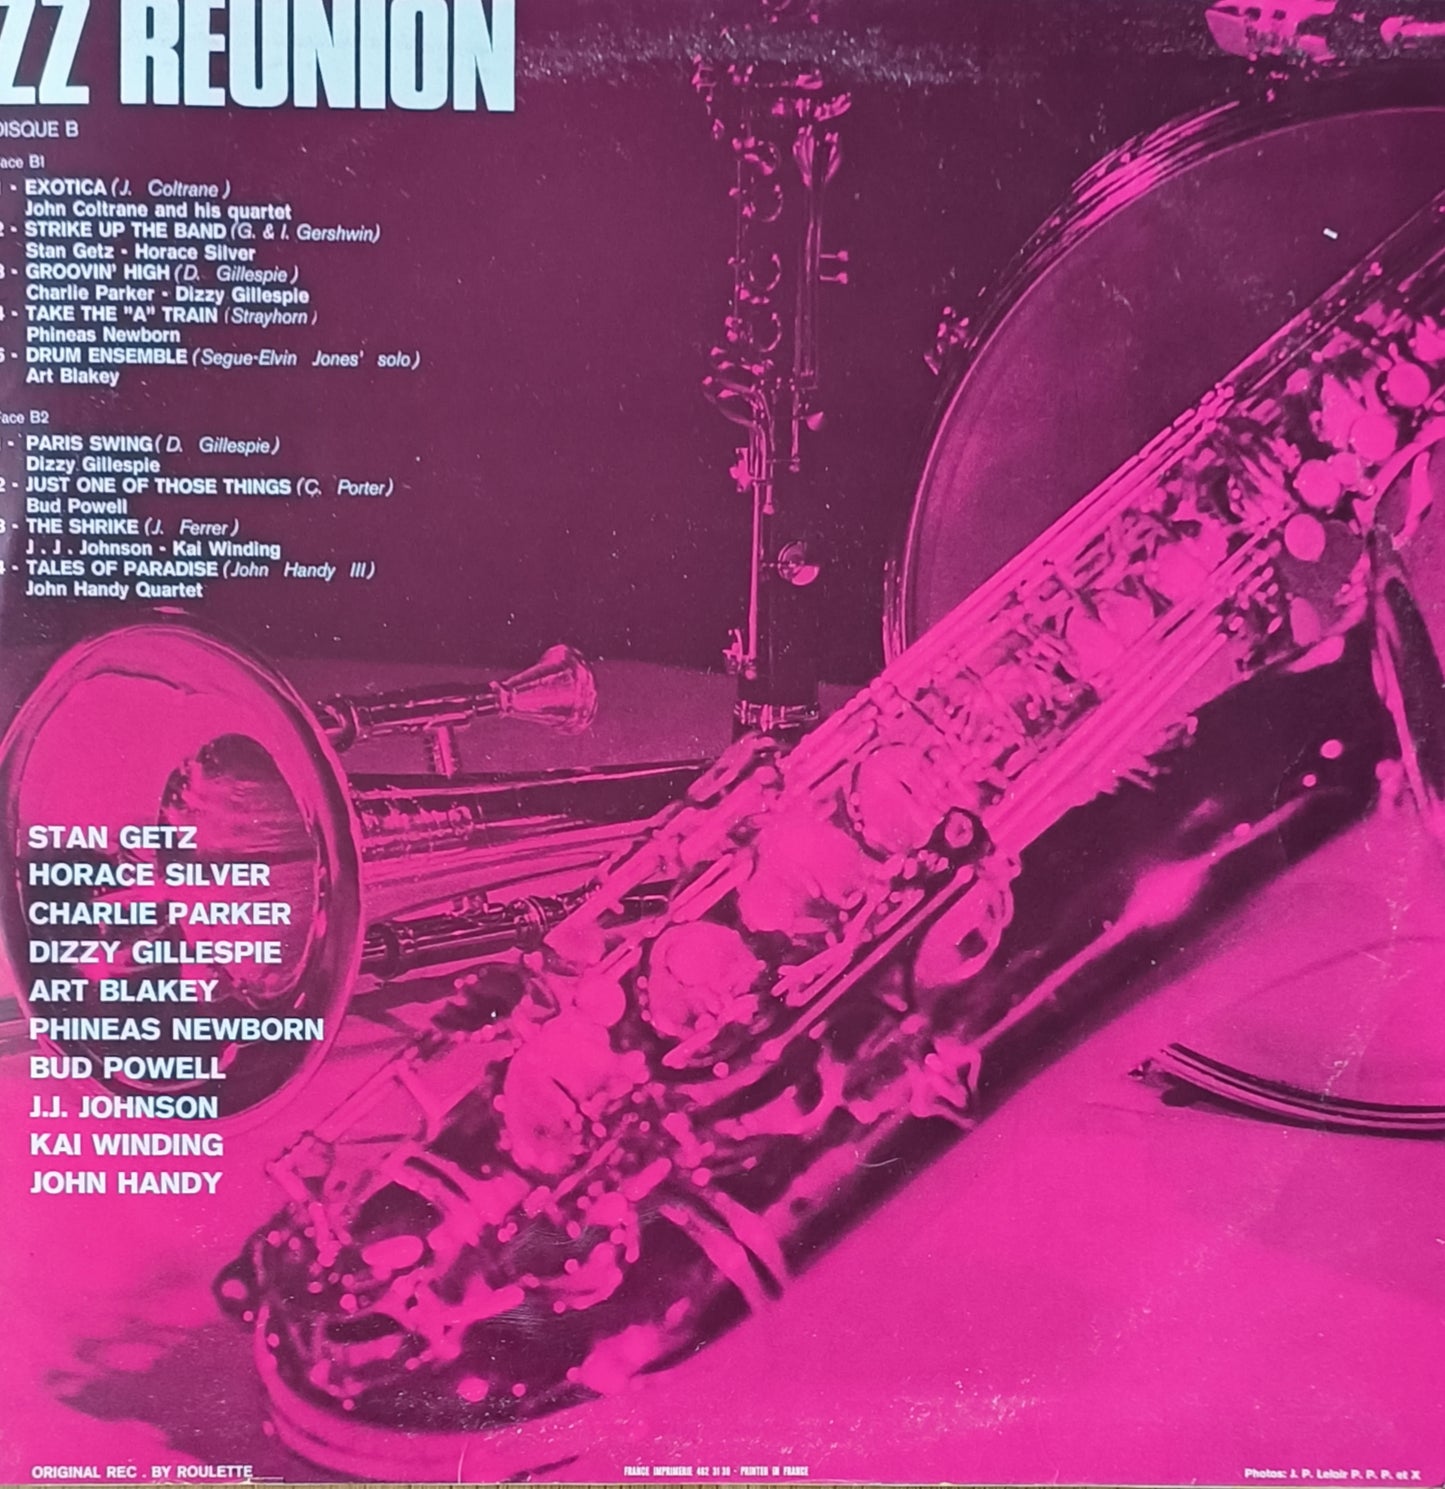 The Great Jazz Reunion